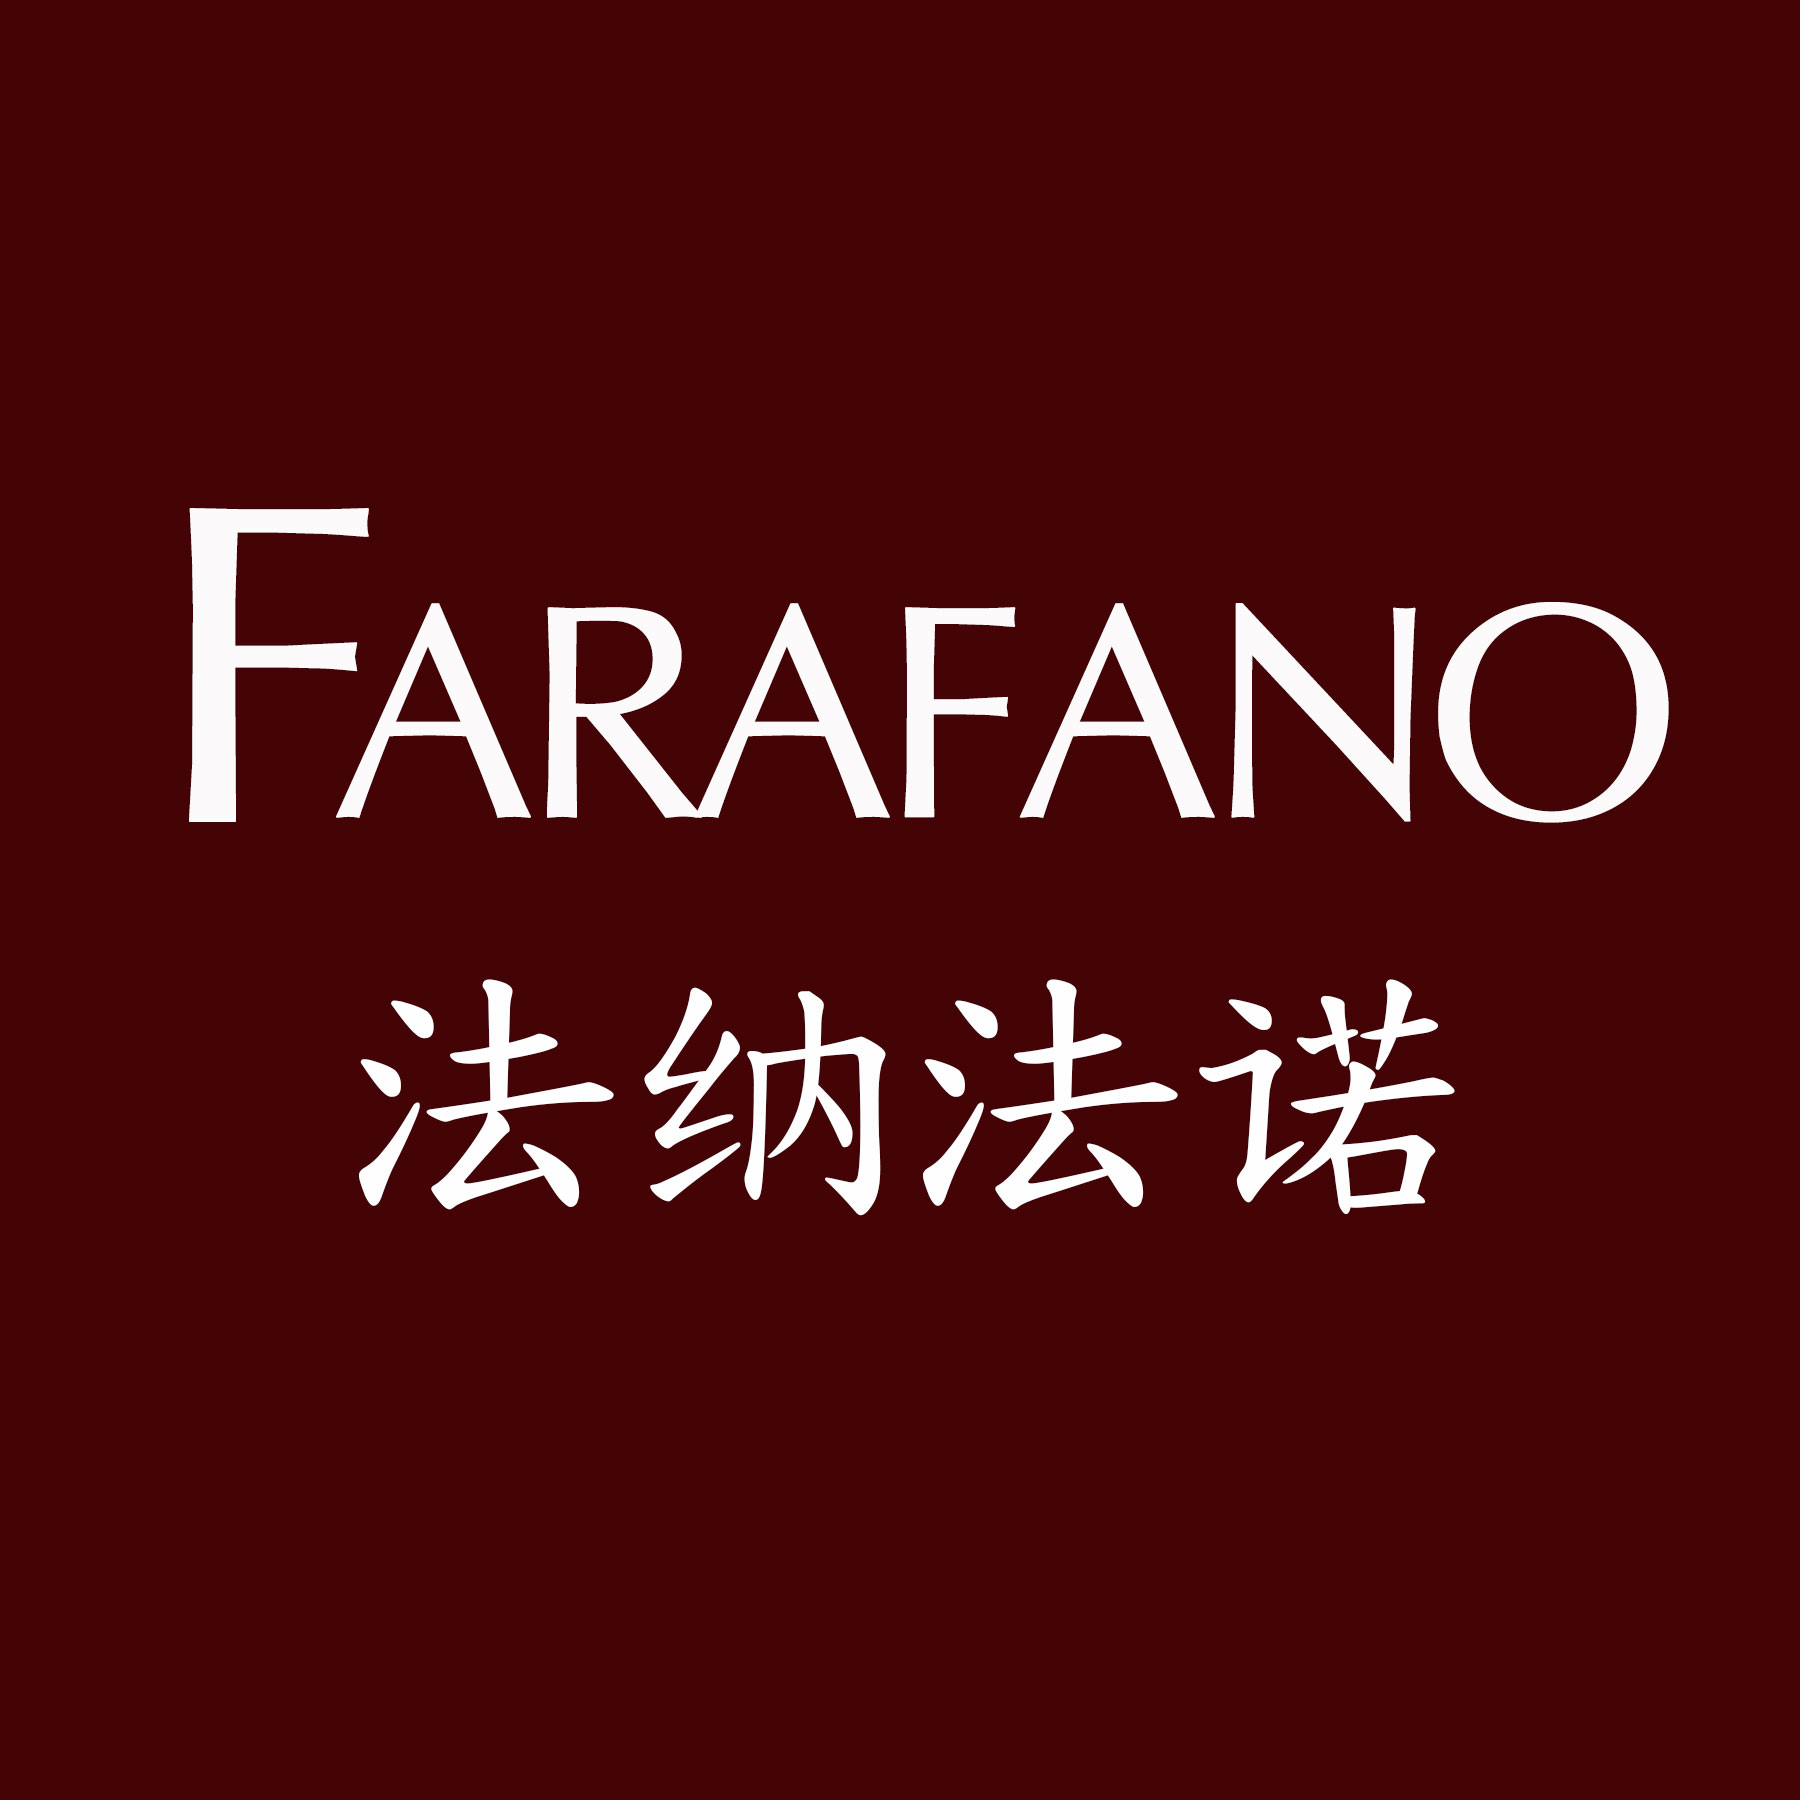 Farafano